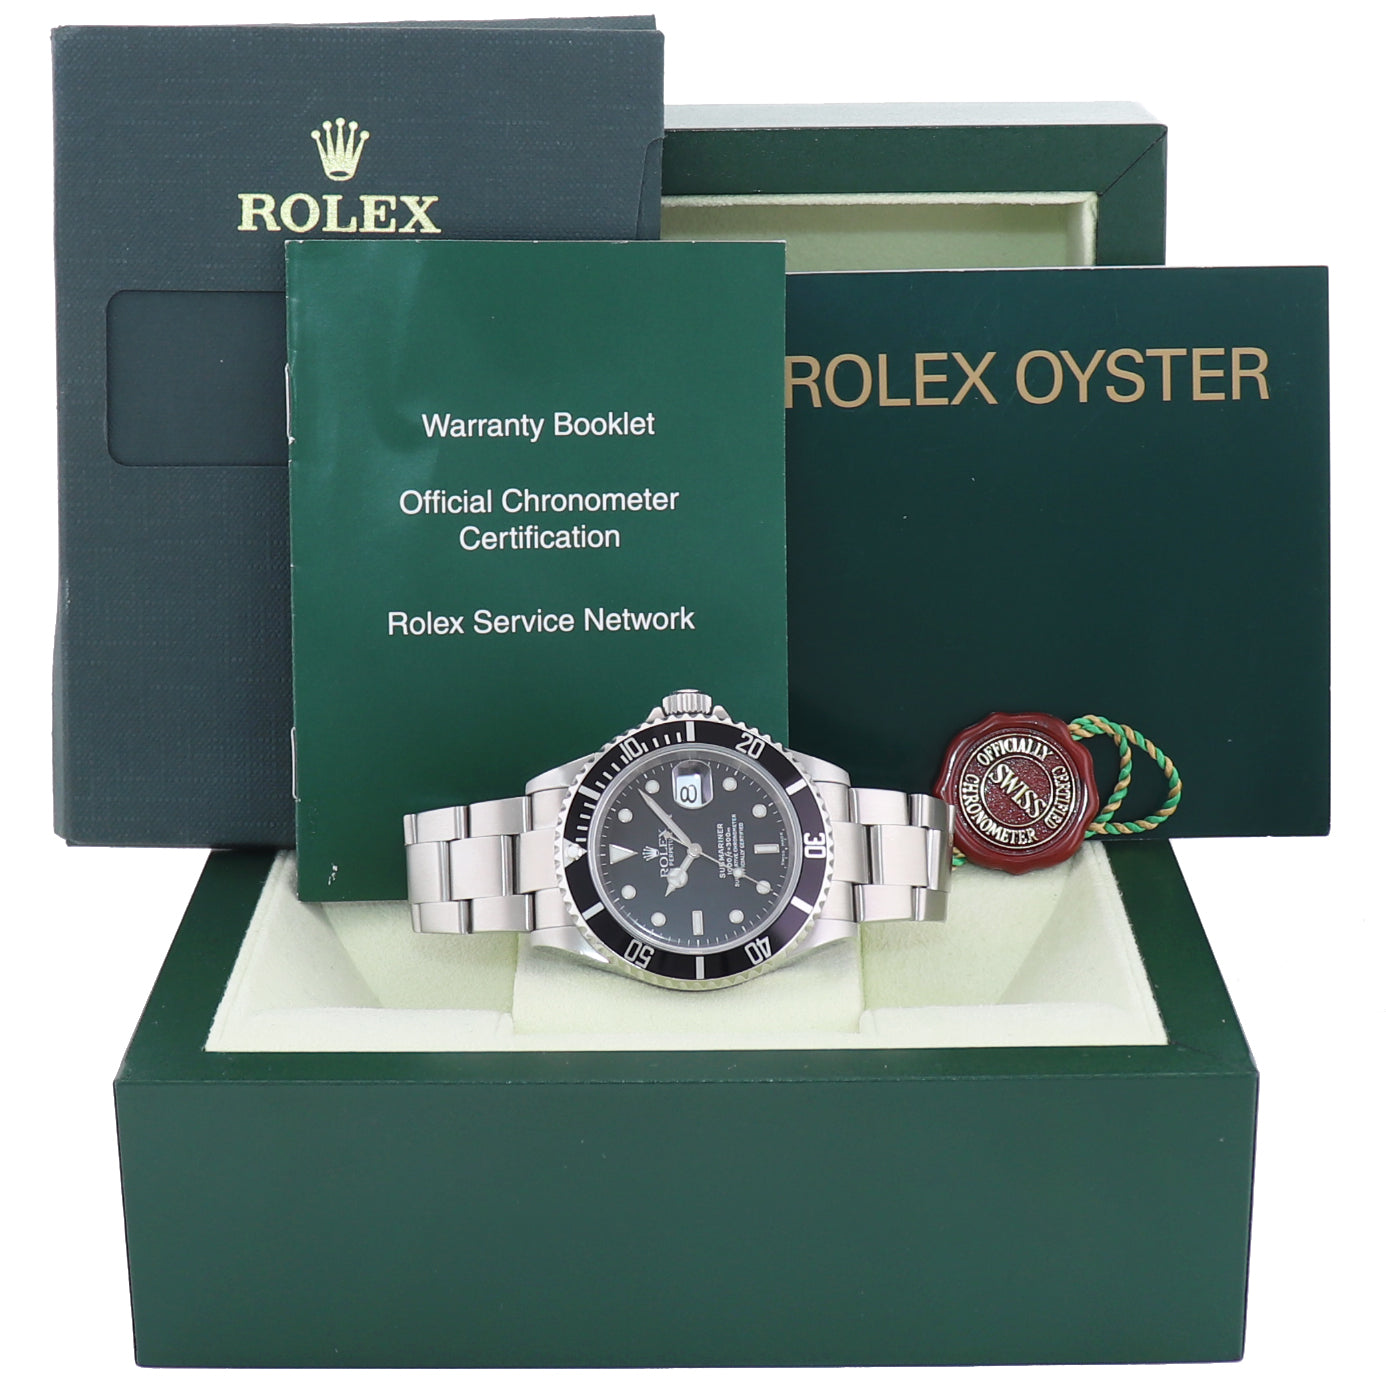 2004 MINT Rolex Submariner Date 16610 Steel Black 40mm Oyster Watch Box